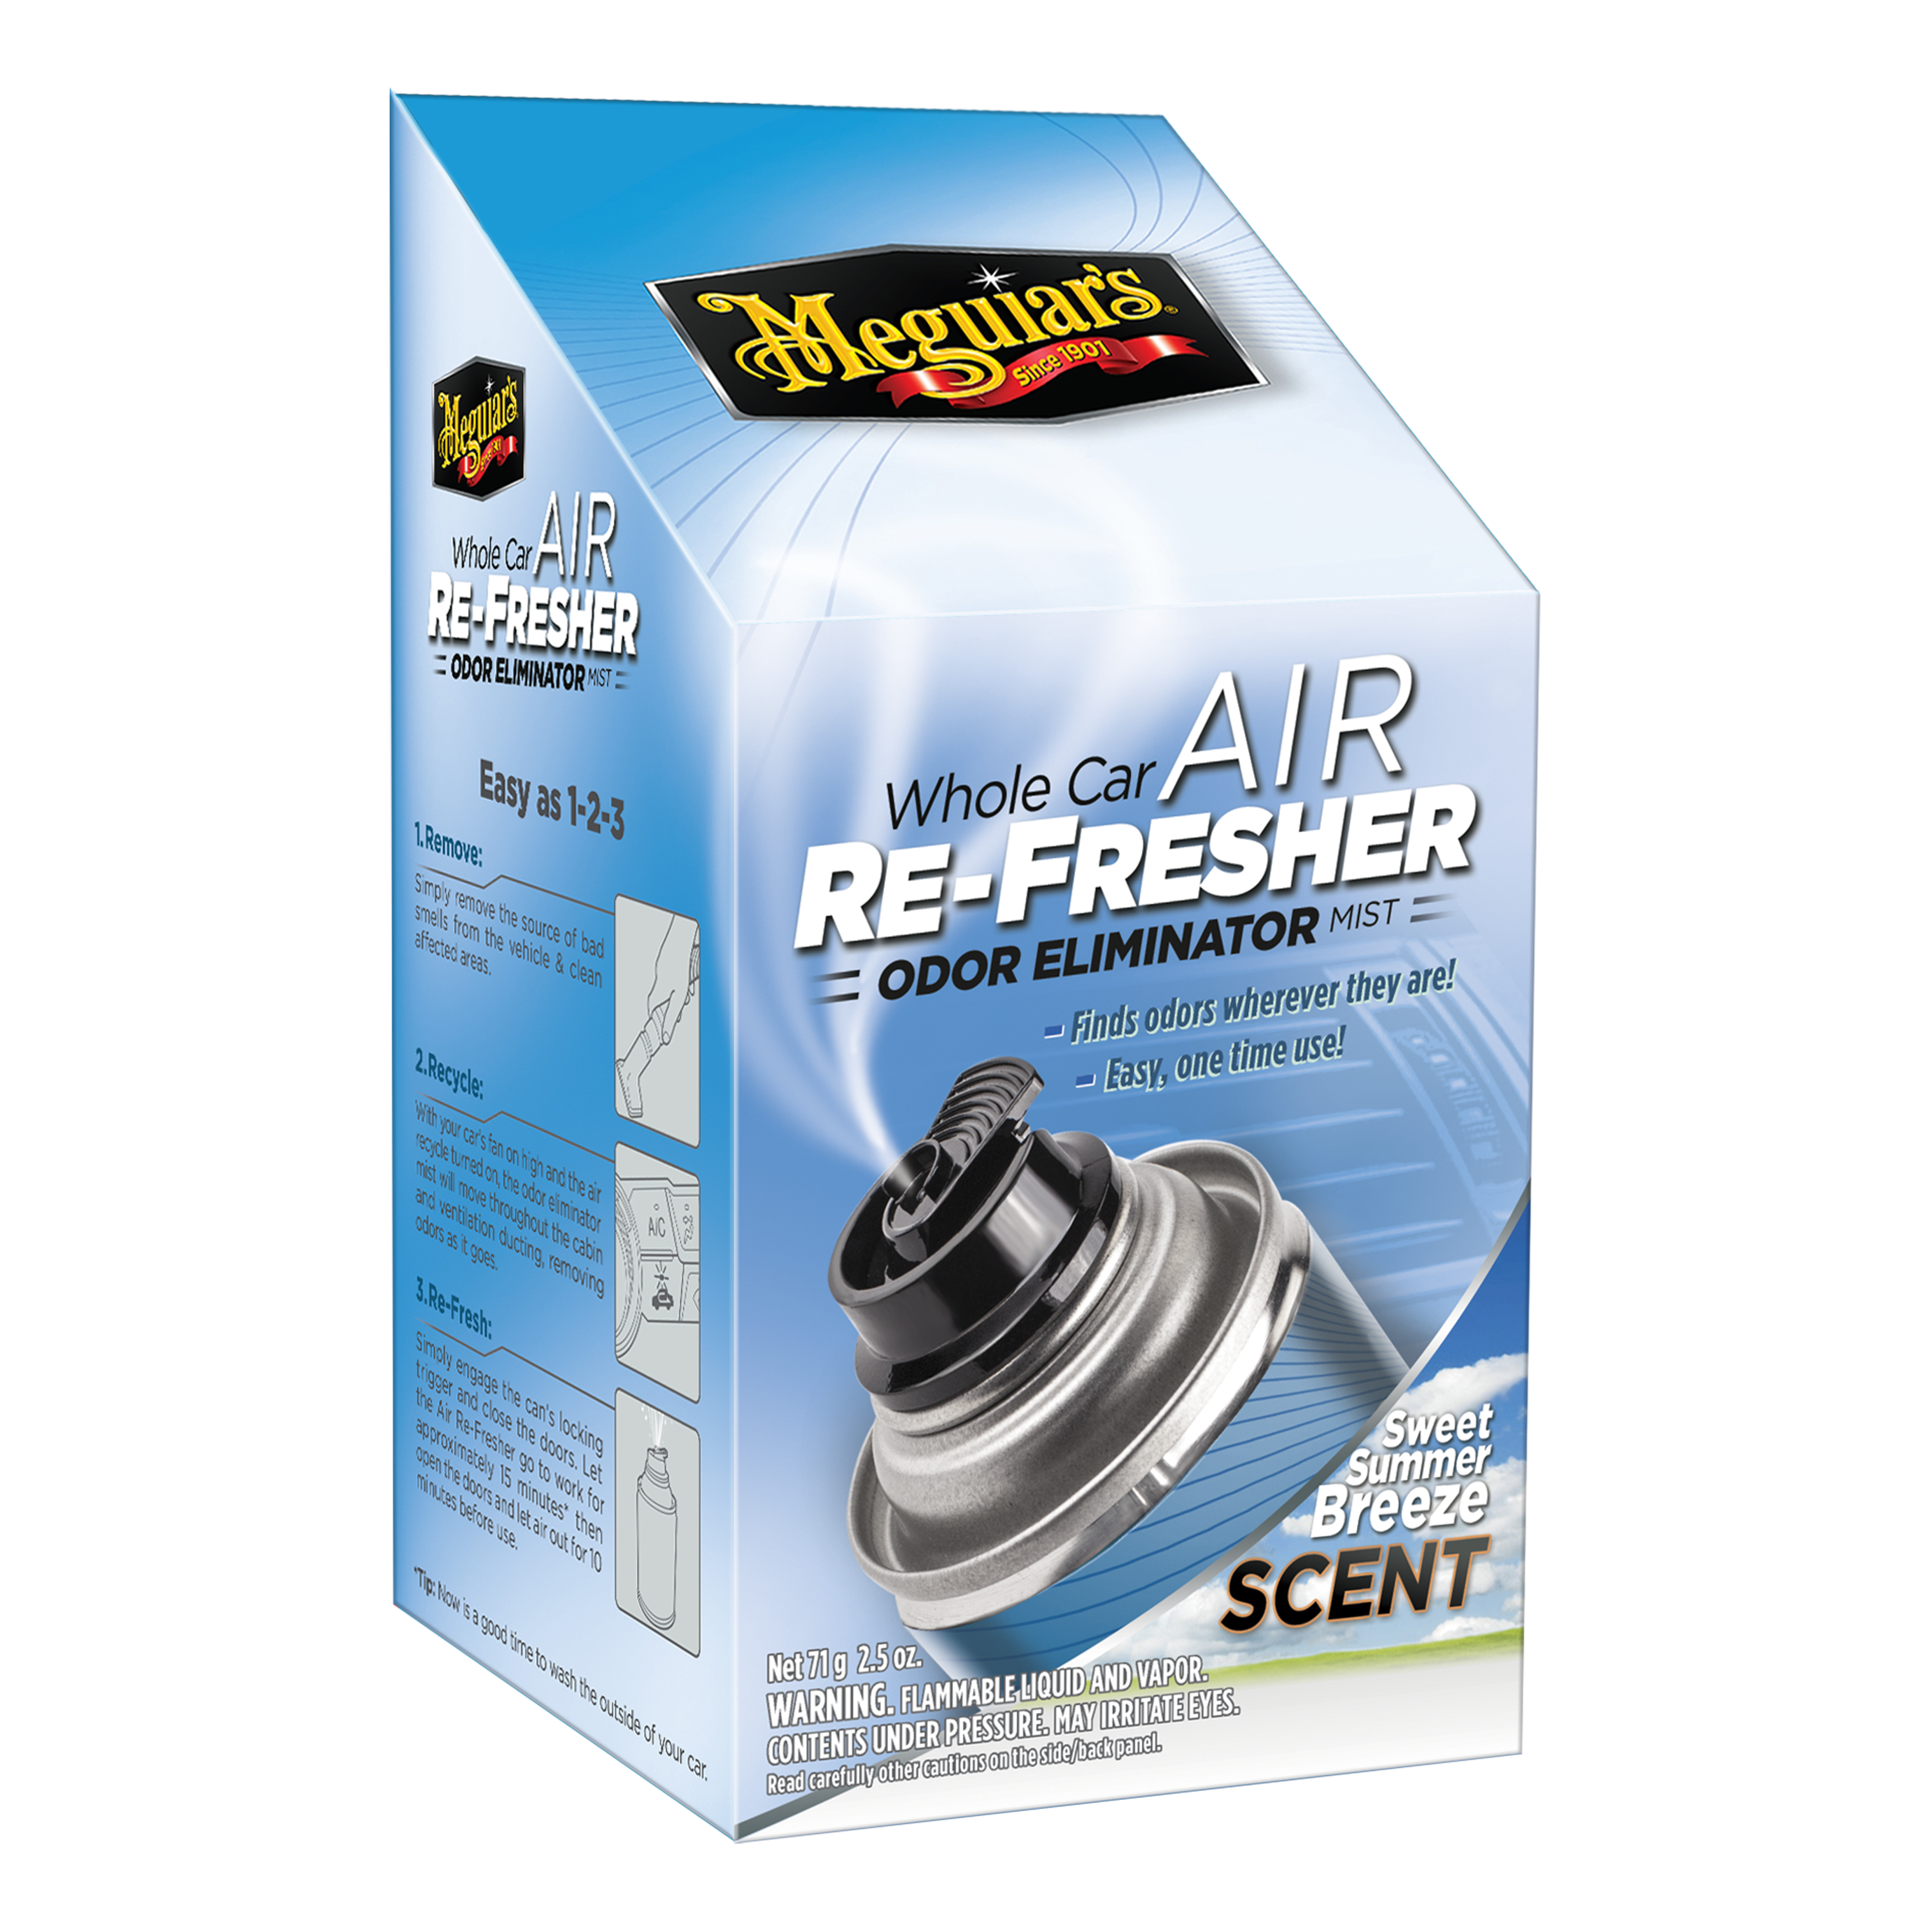 Meguiar's Whole Car Air Re-Fresher - Summer Breeze Scent G16602